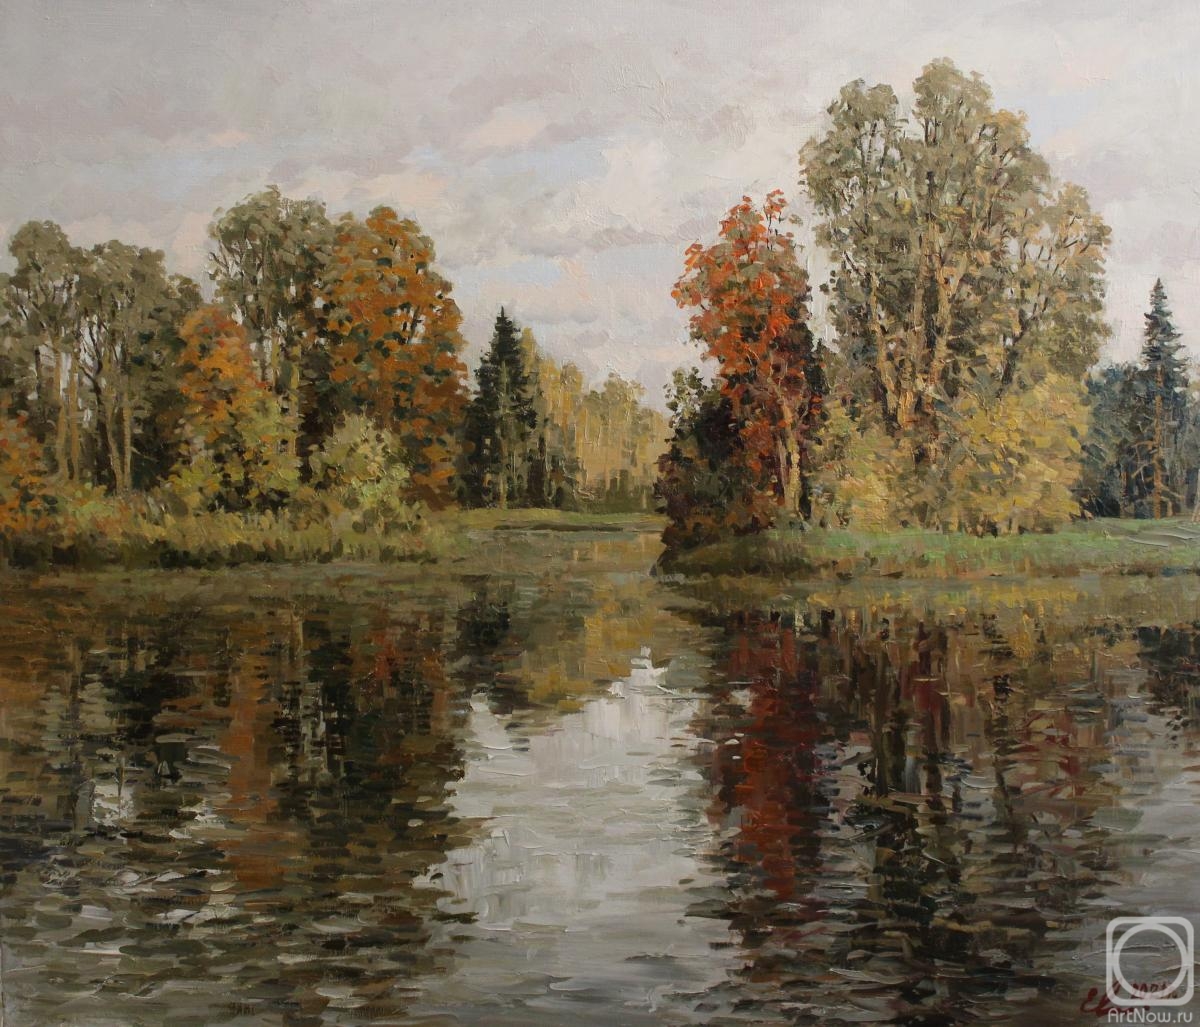 Malykh Evgeny. Autumn Landscape